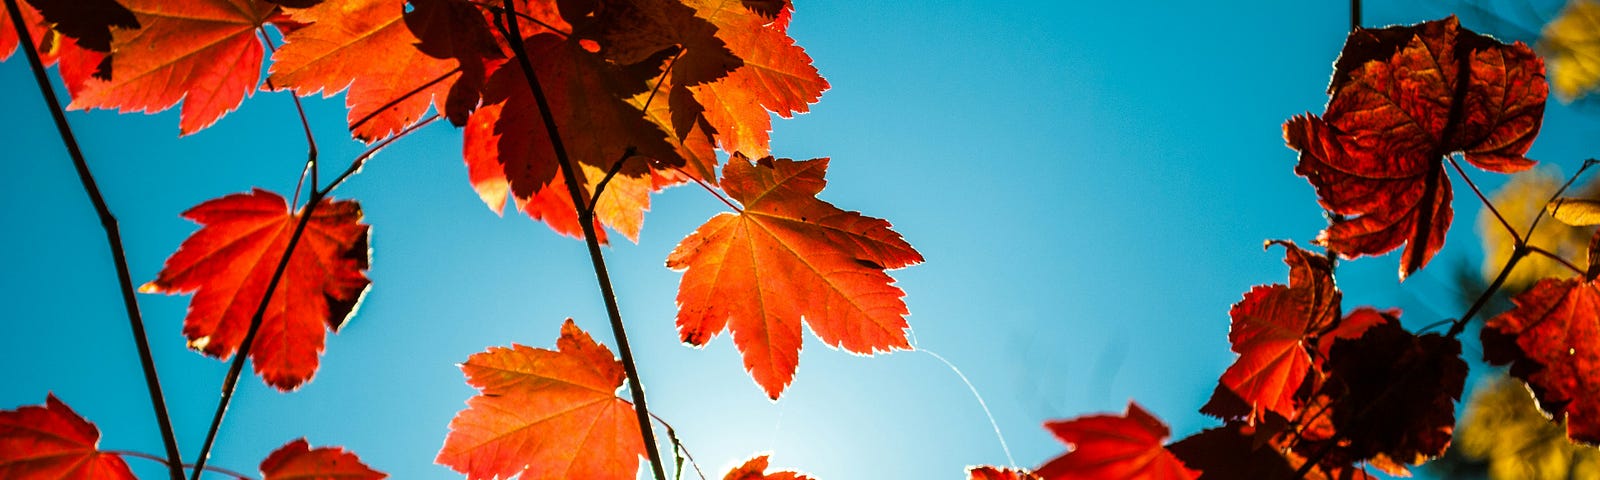 Reddish orange leaves of fall still on the limbs of a tree.